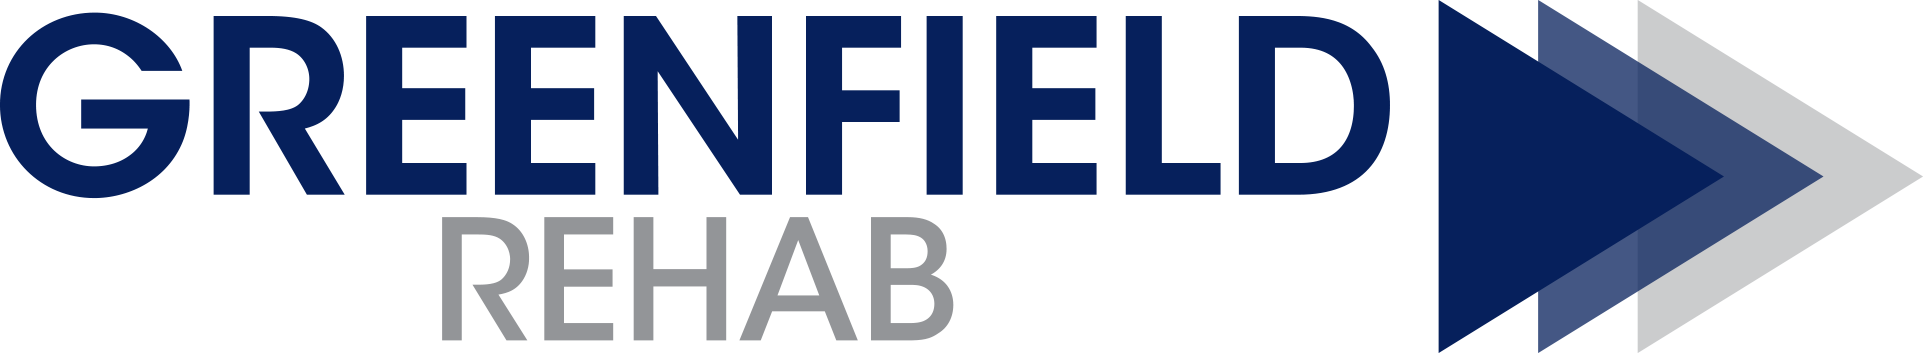 Greenfield Rehabilitation Agency, Inc. logo